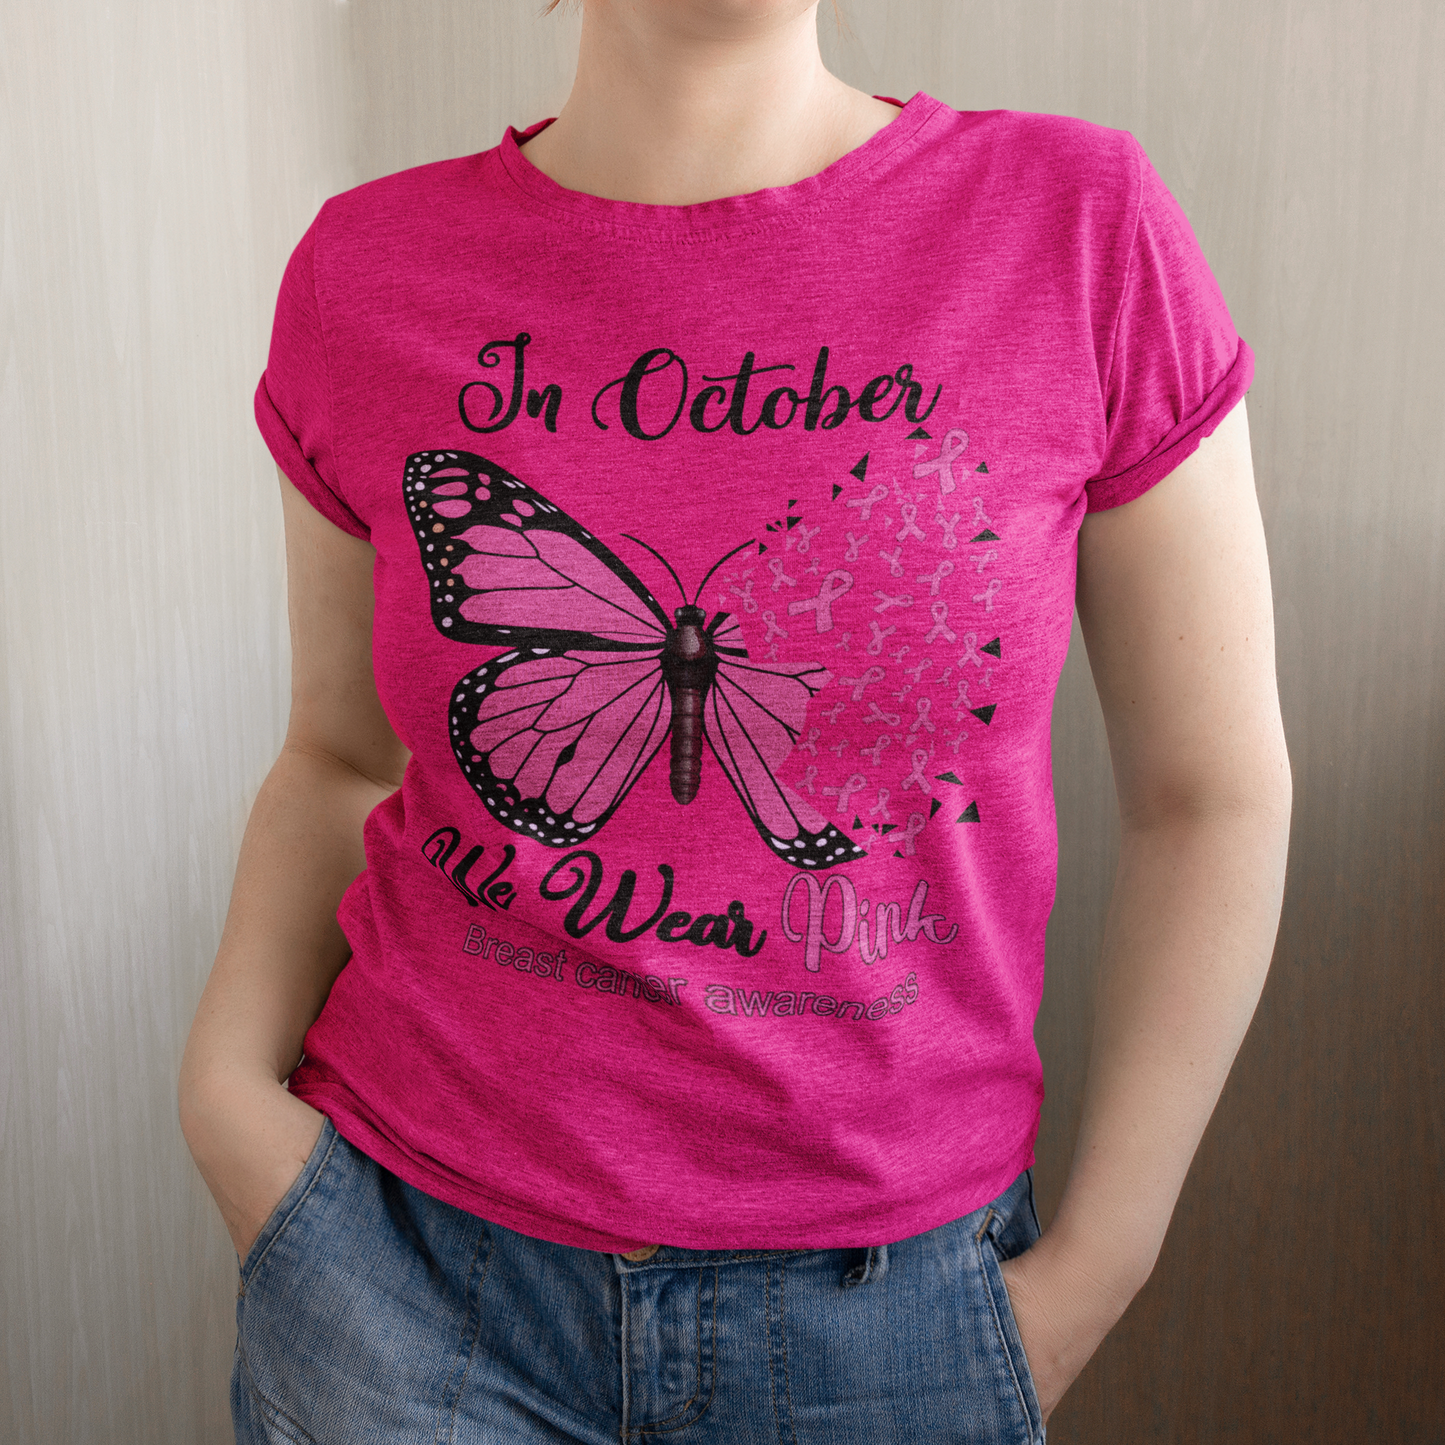 woman breast cancer awareness shirt